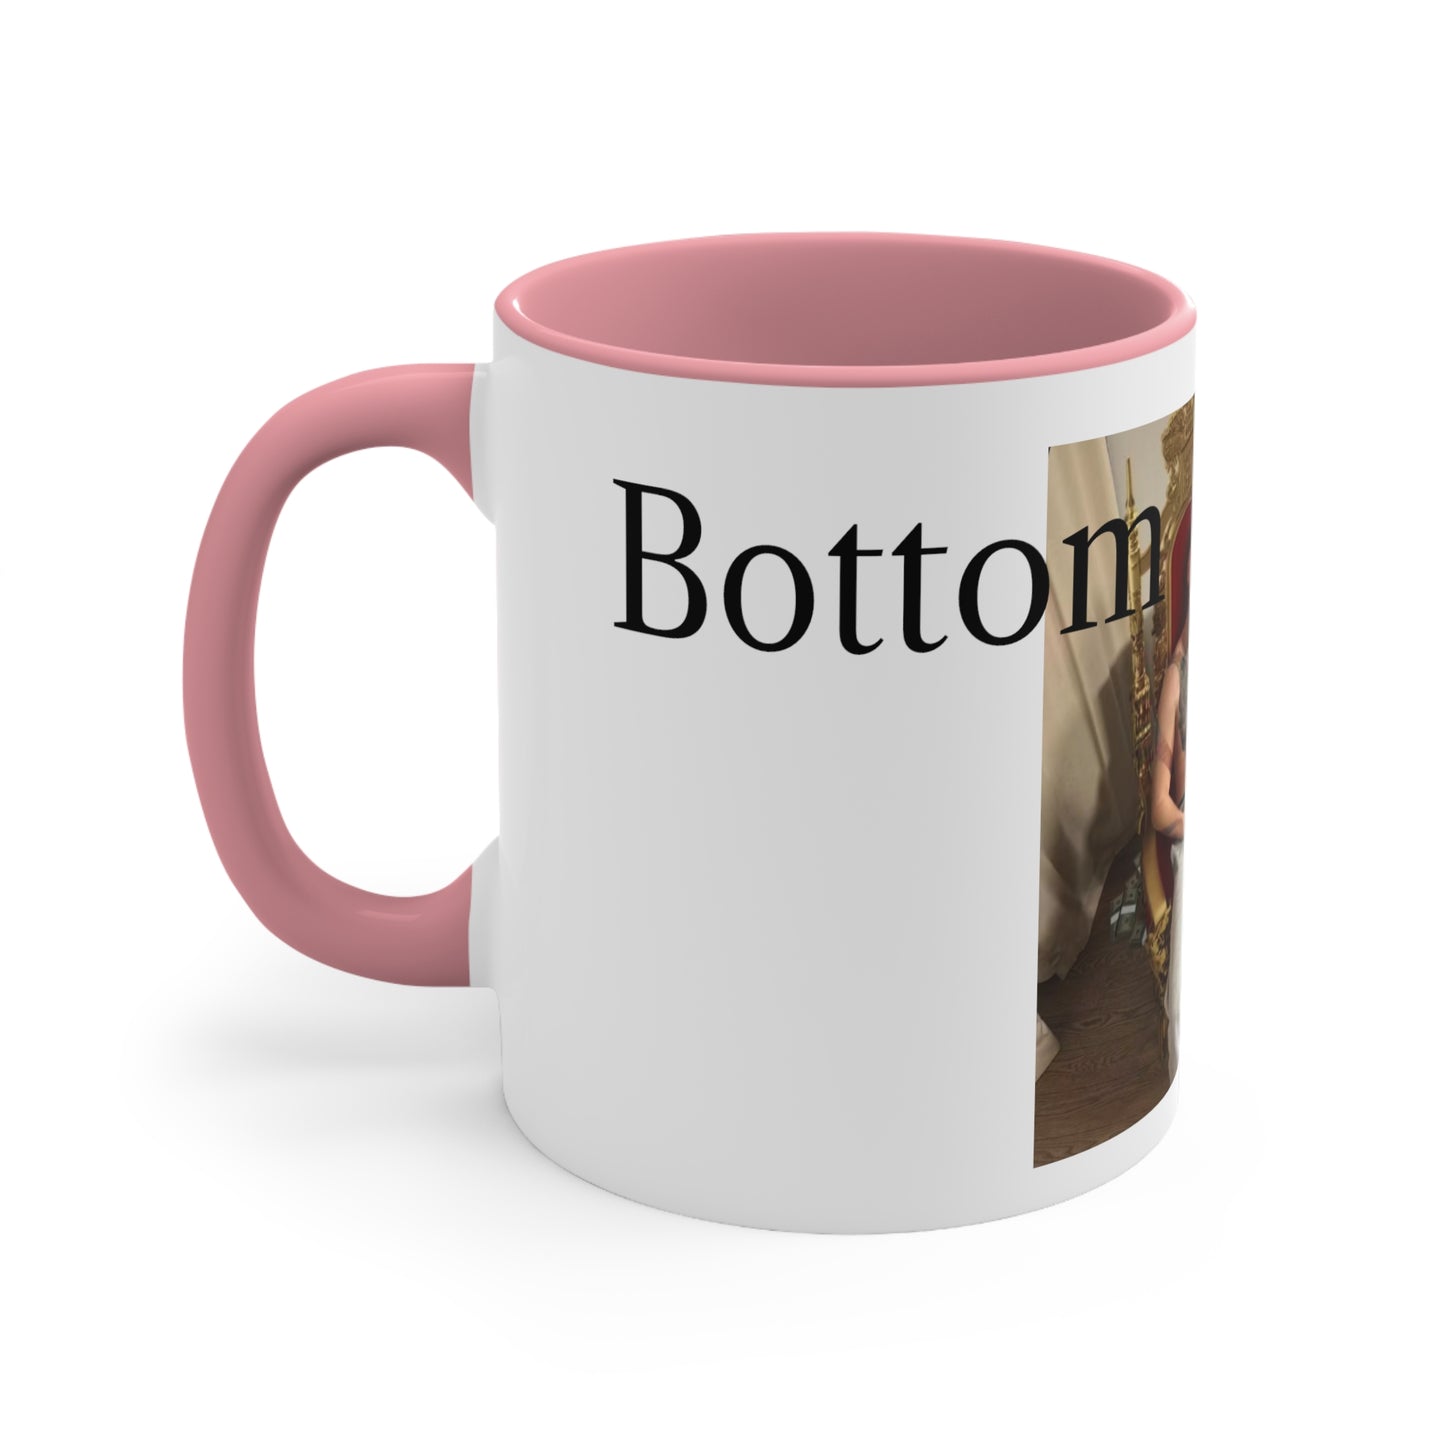 Bottom G Mug